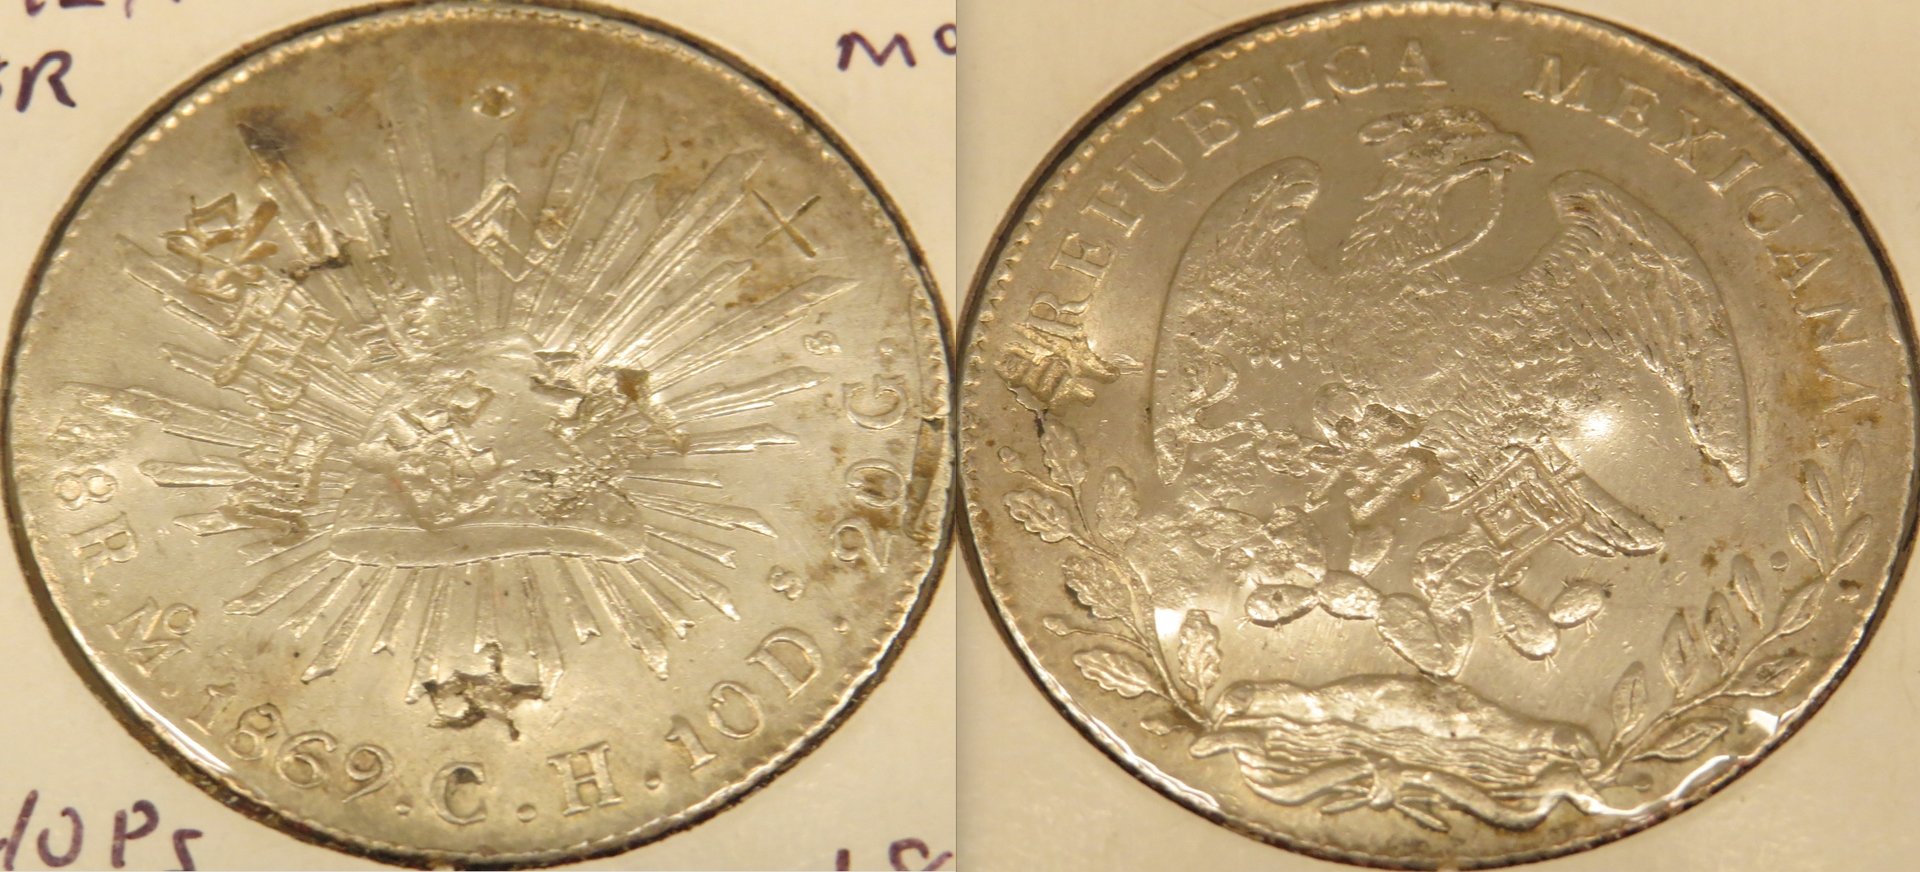 Mexico 8 Reales 1869 chops copy.jpeg